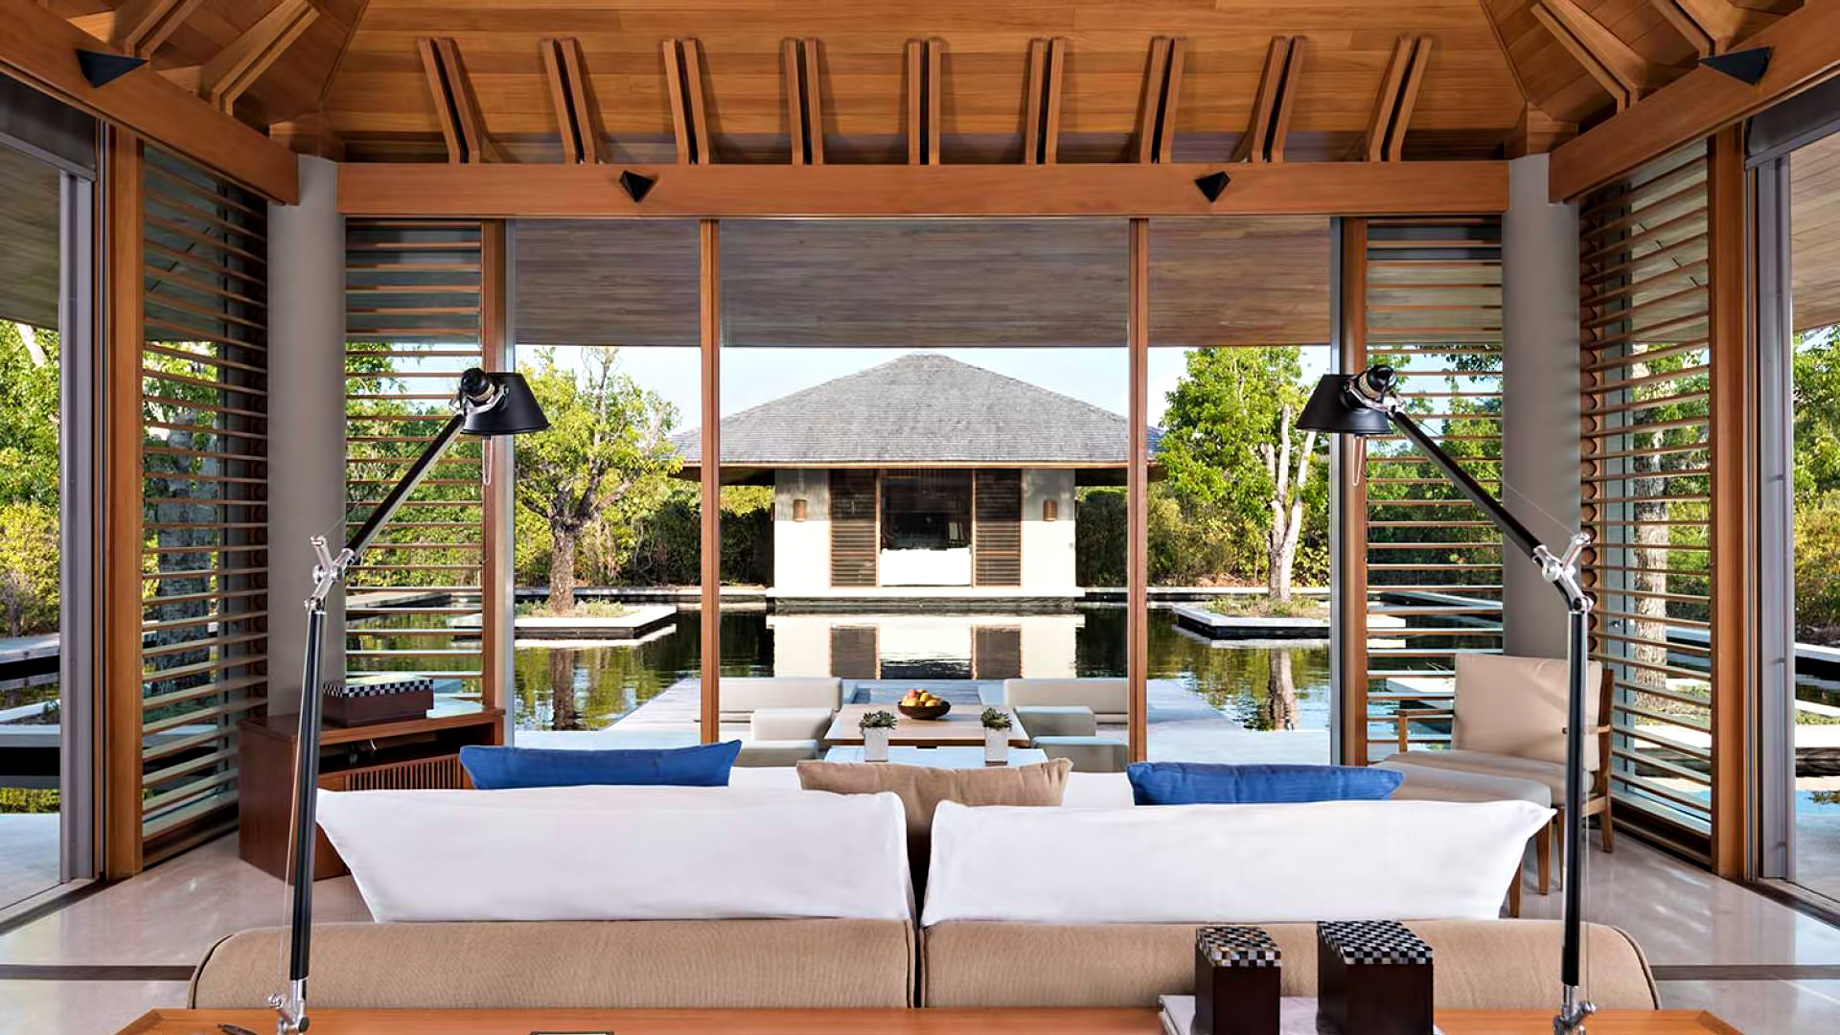 Amanyara Resort – Providenciales, Turks and Caicos Islands – 4 Bedroom Tranquility Villa Bedroom View